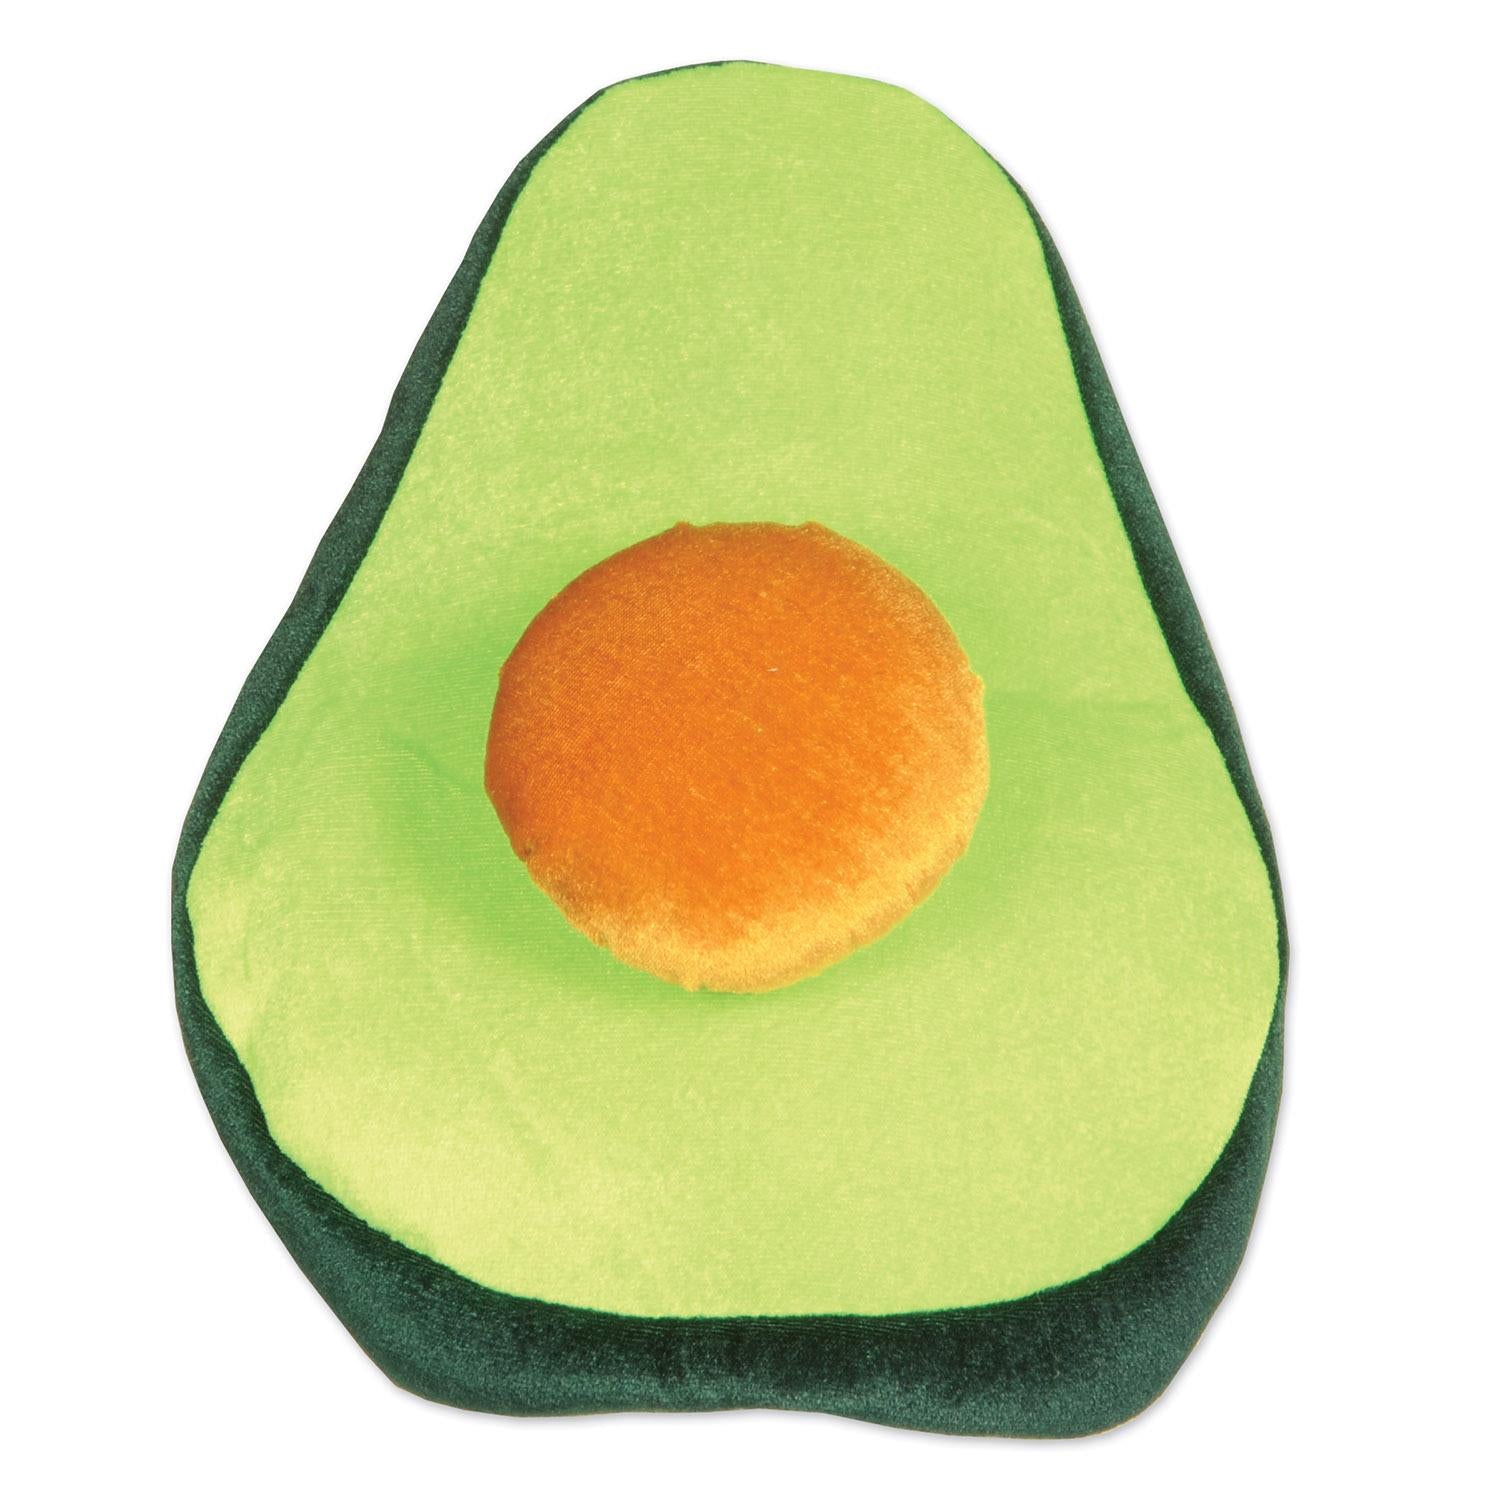 plush avocado